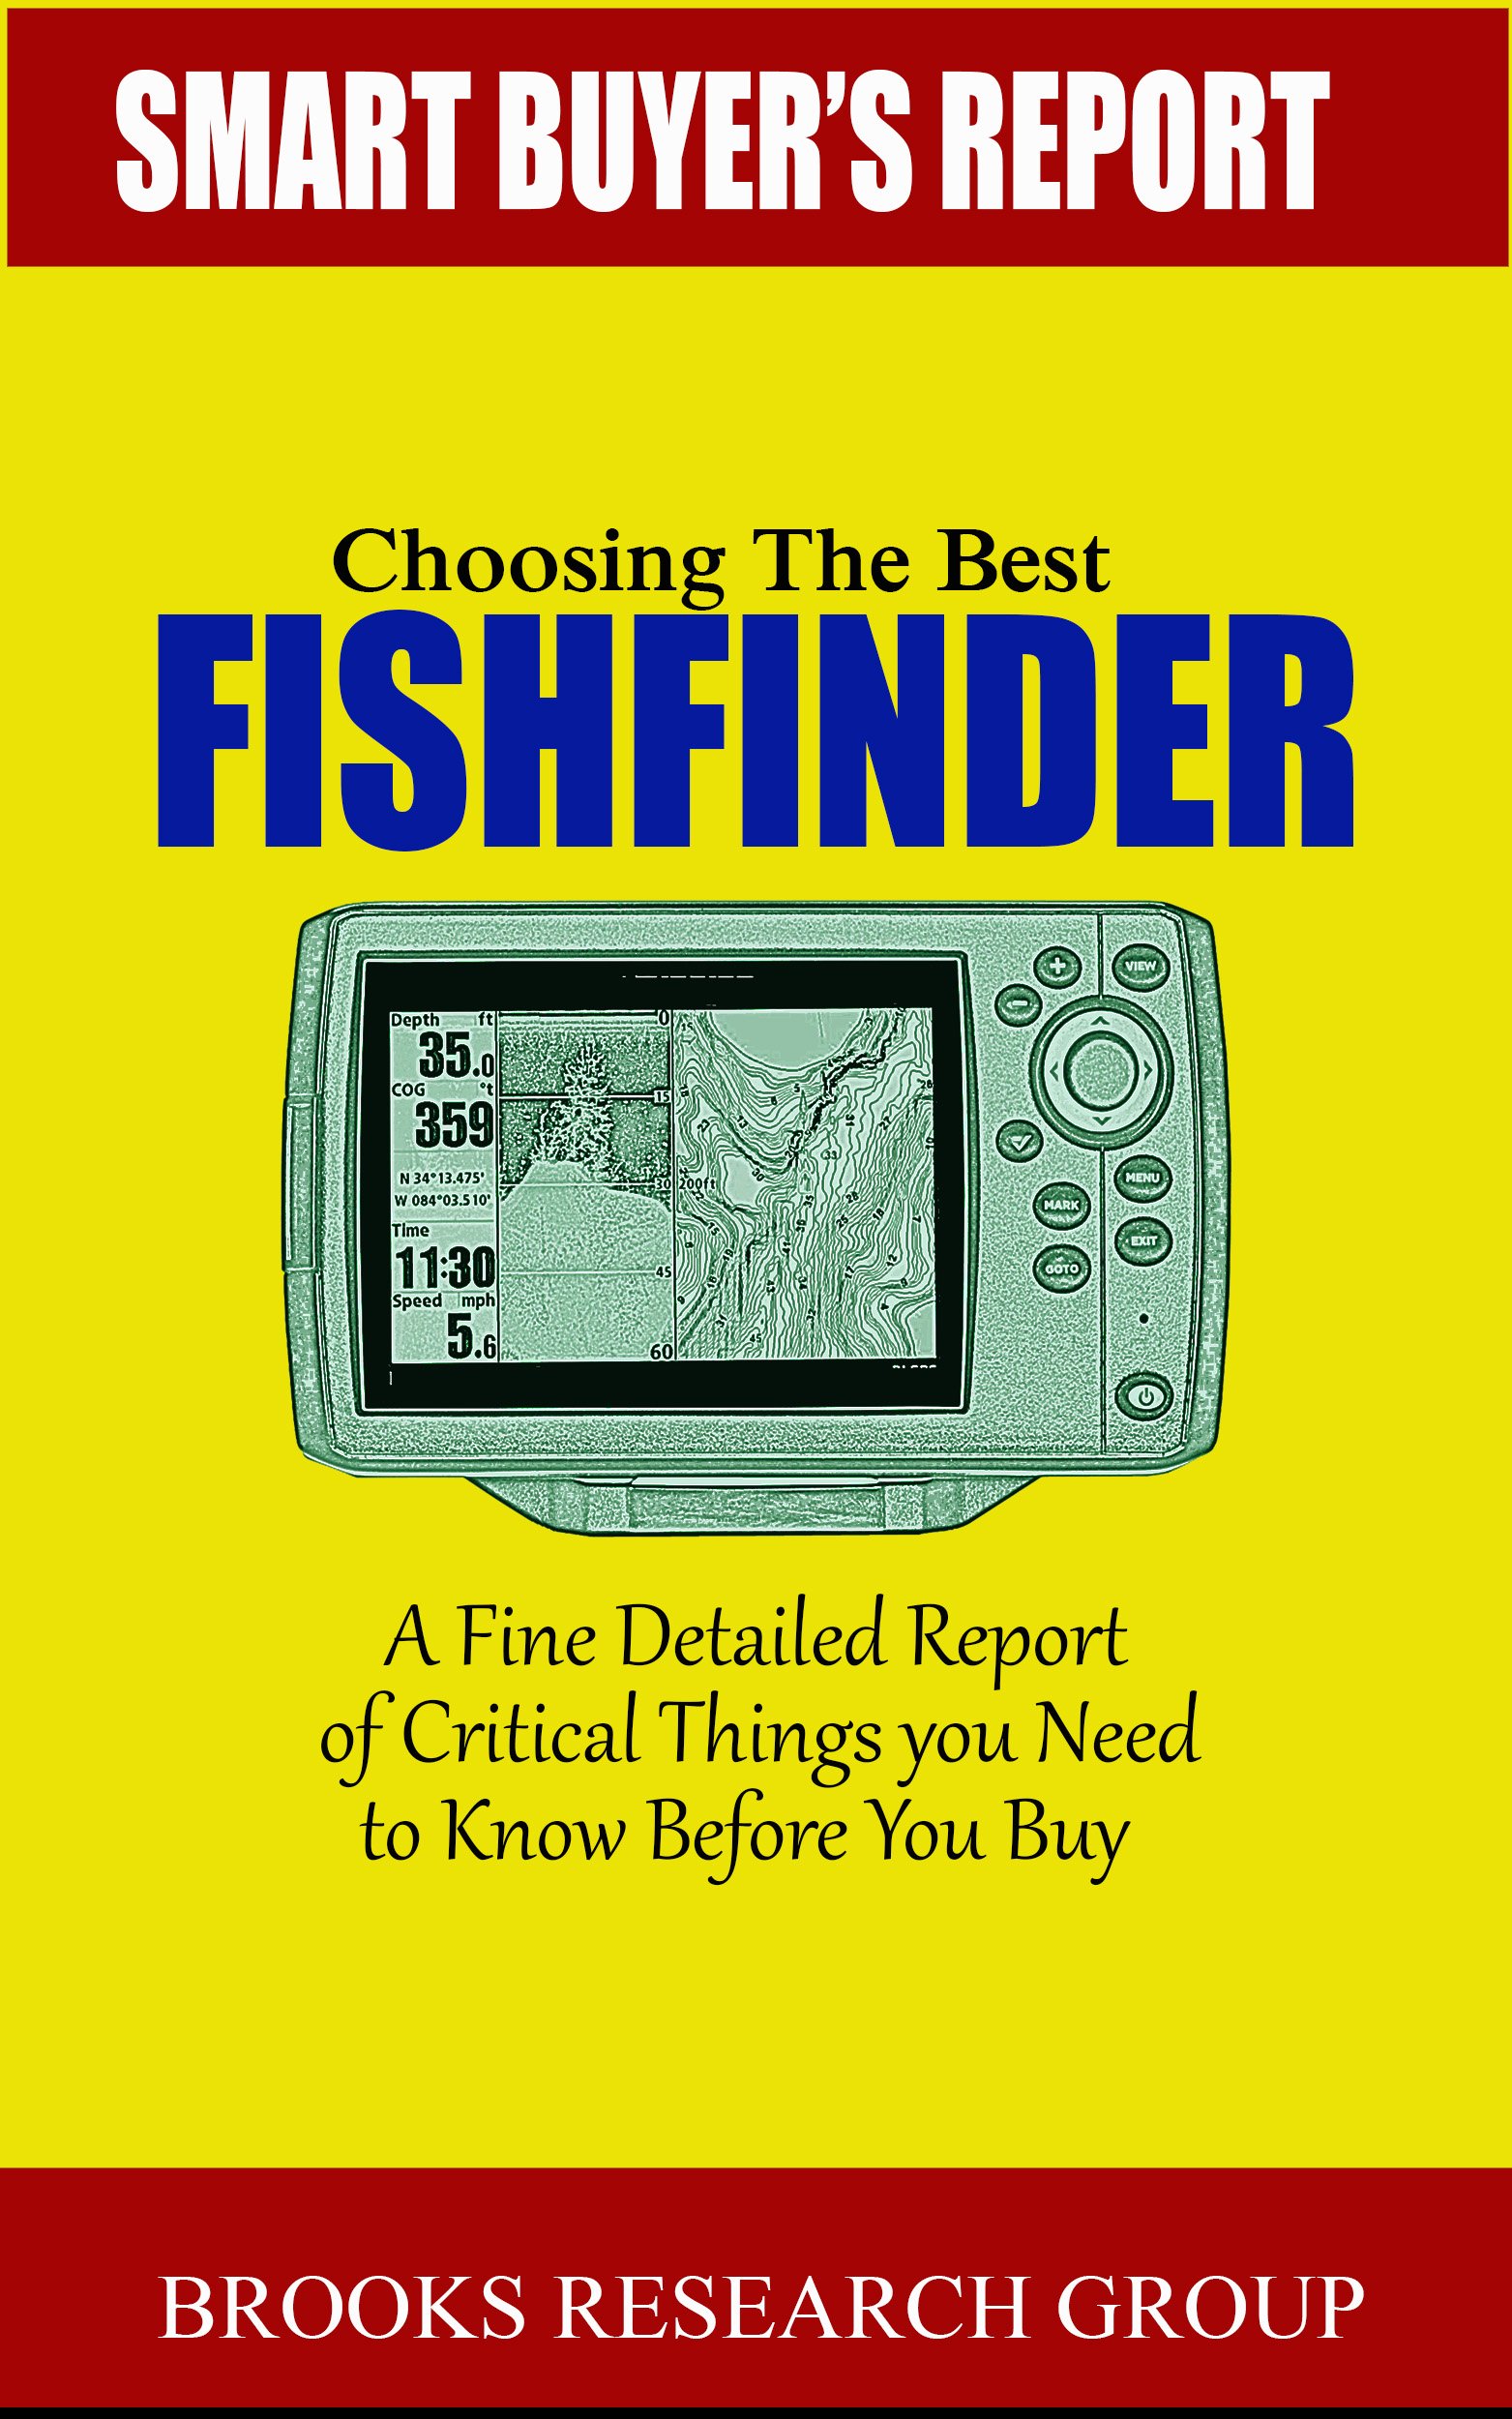 Choosing The Best Fishfinder: A Fine Detailed Report Of Things to Know Before Buy, Reviews on Humminbird Fishfinders, Garmin Fishfinders,Lowrance Fishfinders,Deeper Fishfinders